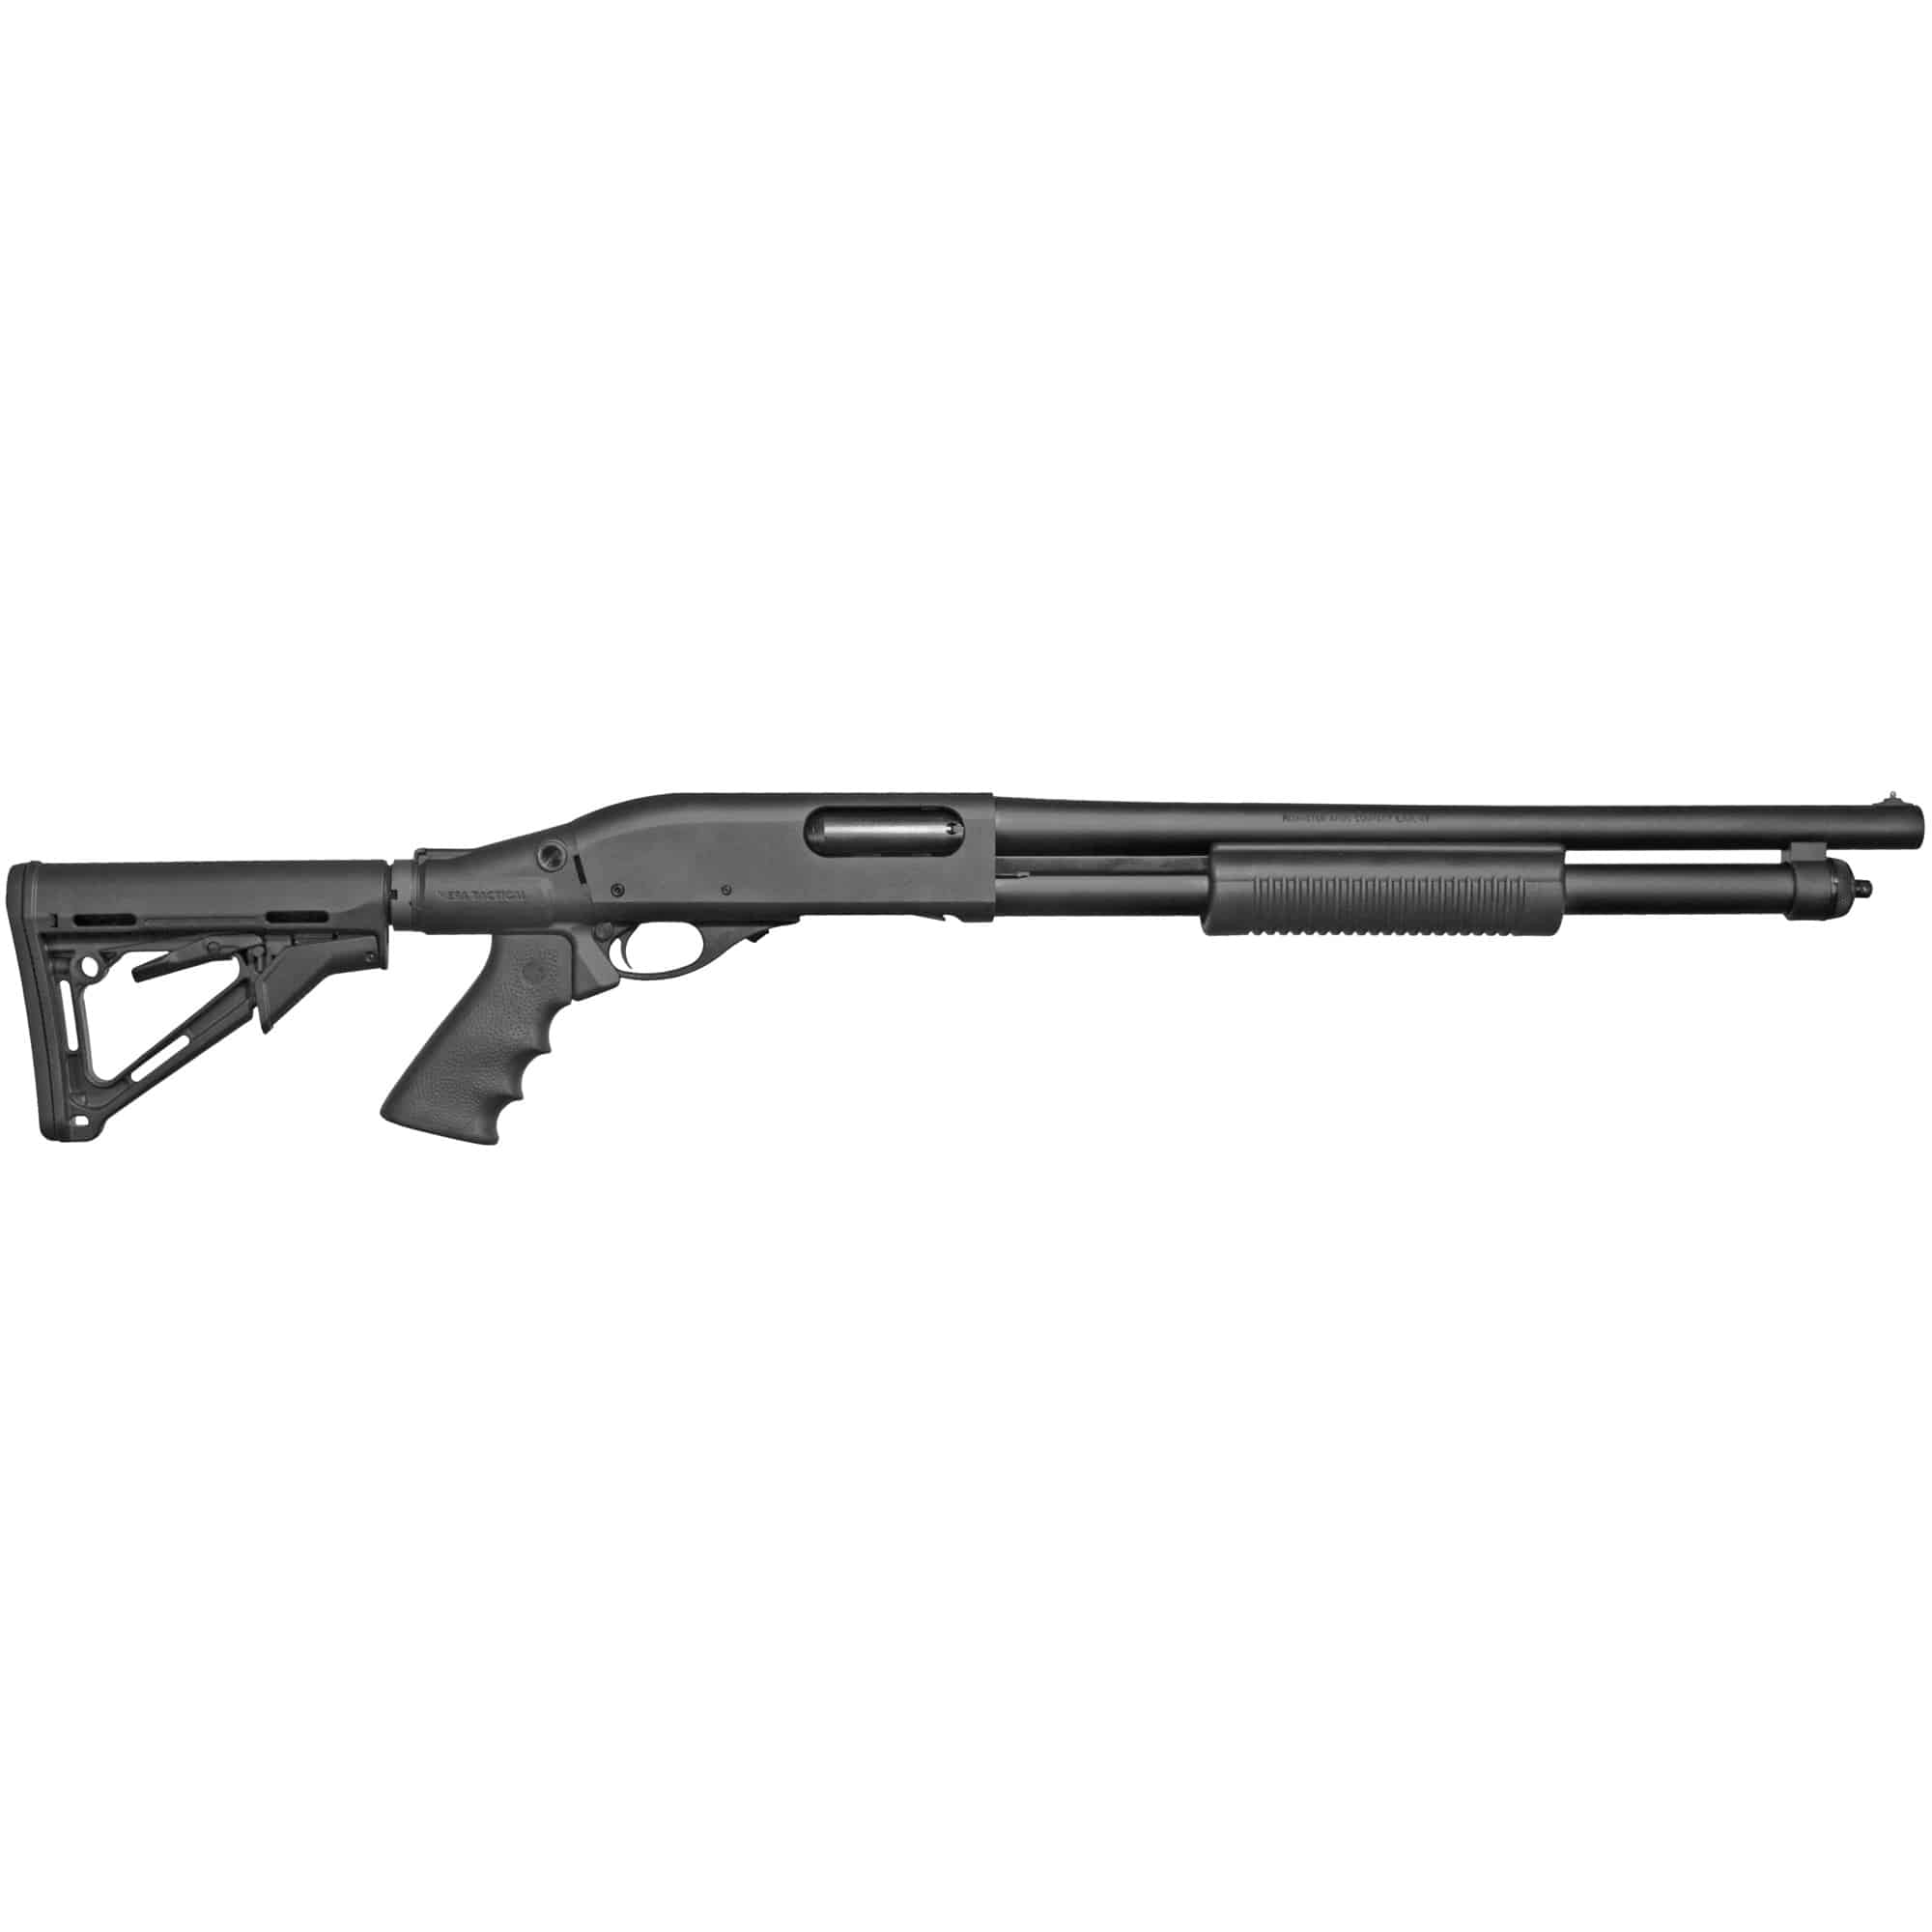 https://cityarsenal.com/product/remington-870-mesa-tactical-12-gauge-shotgun-black-r81212/